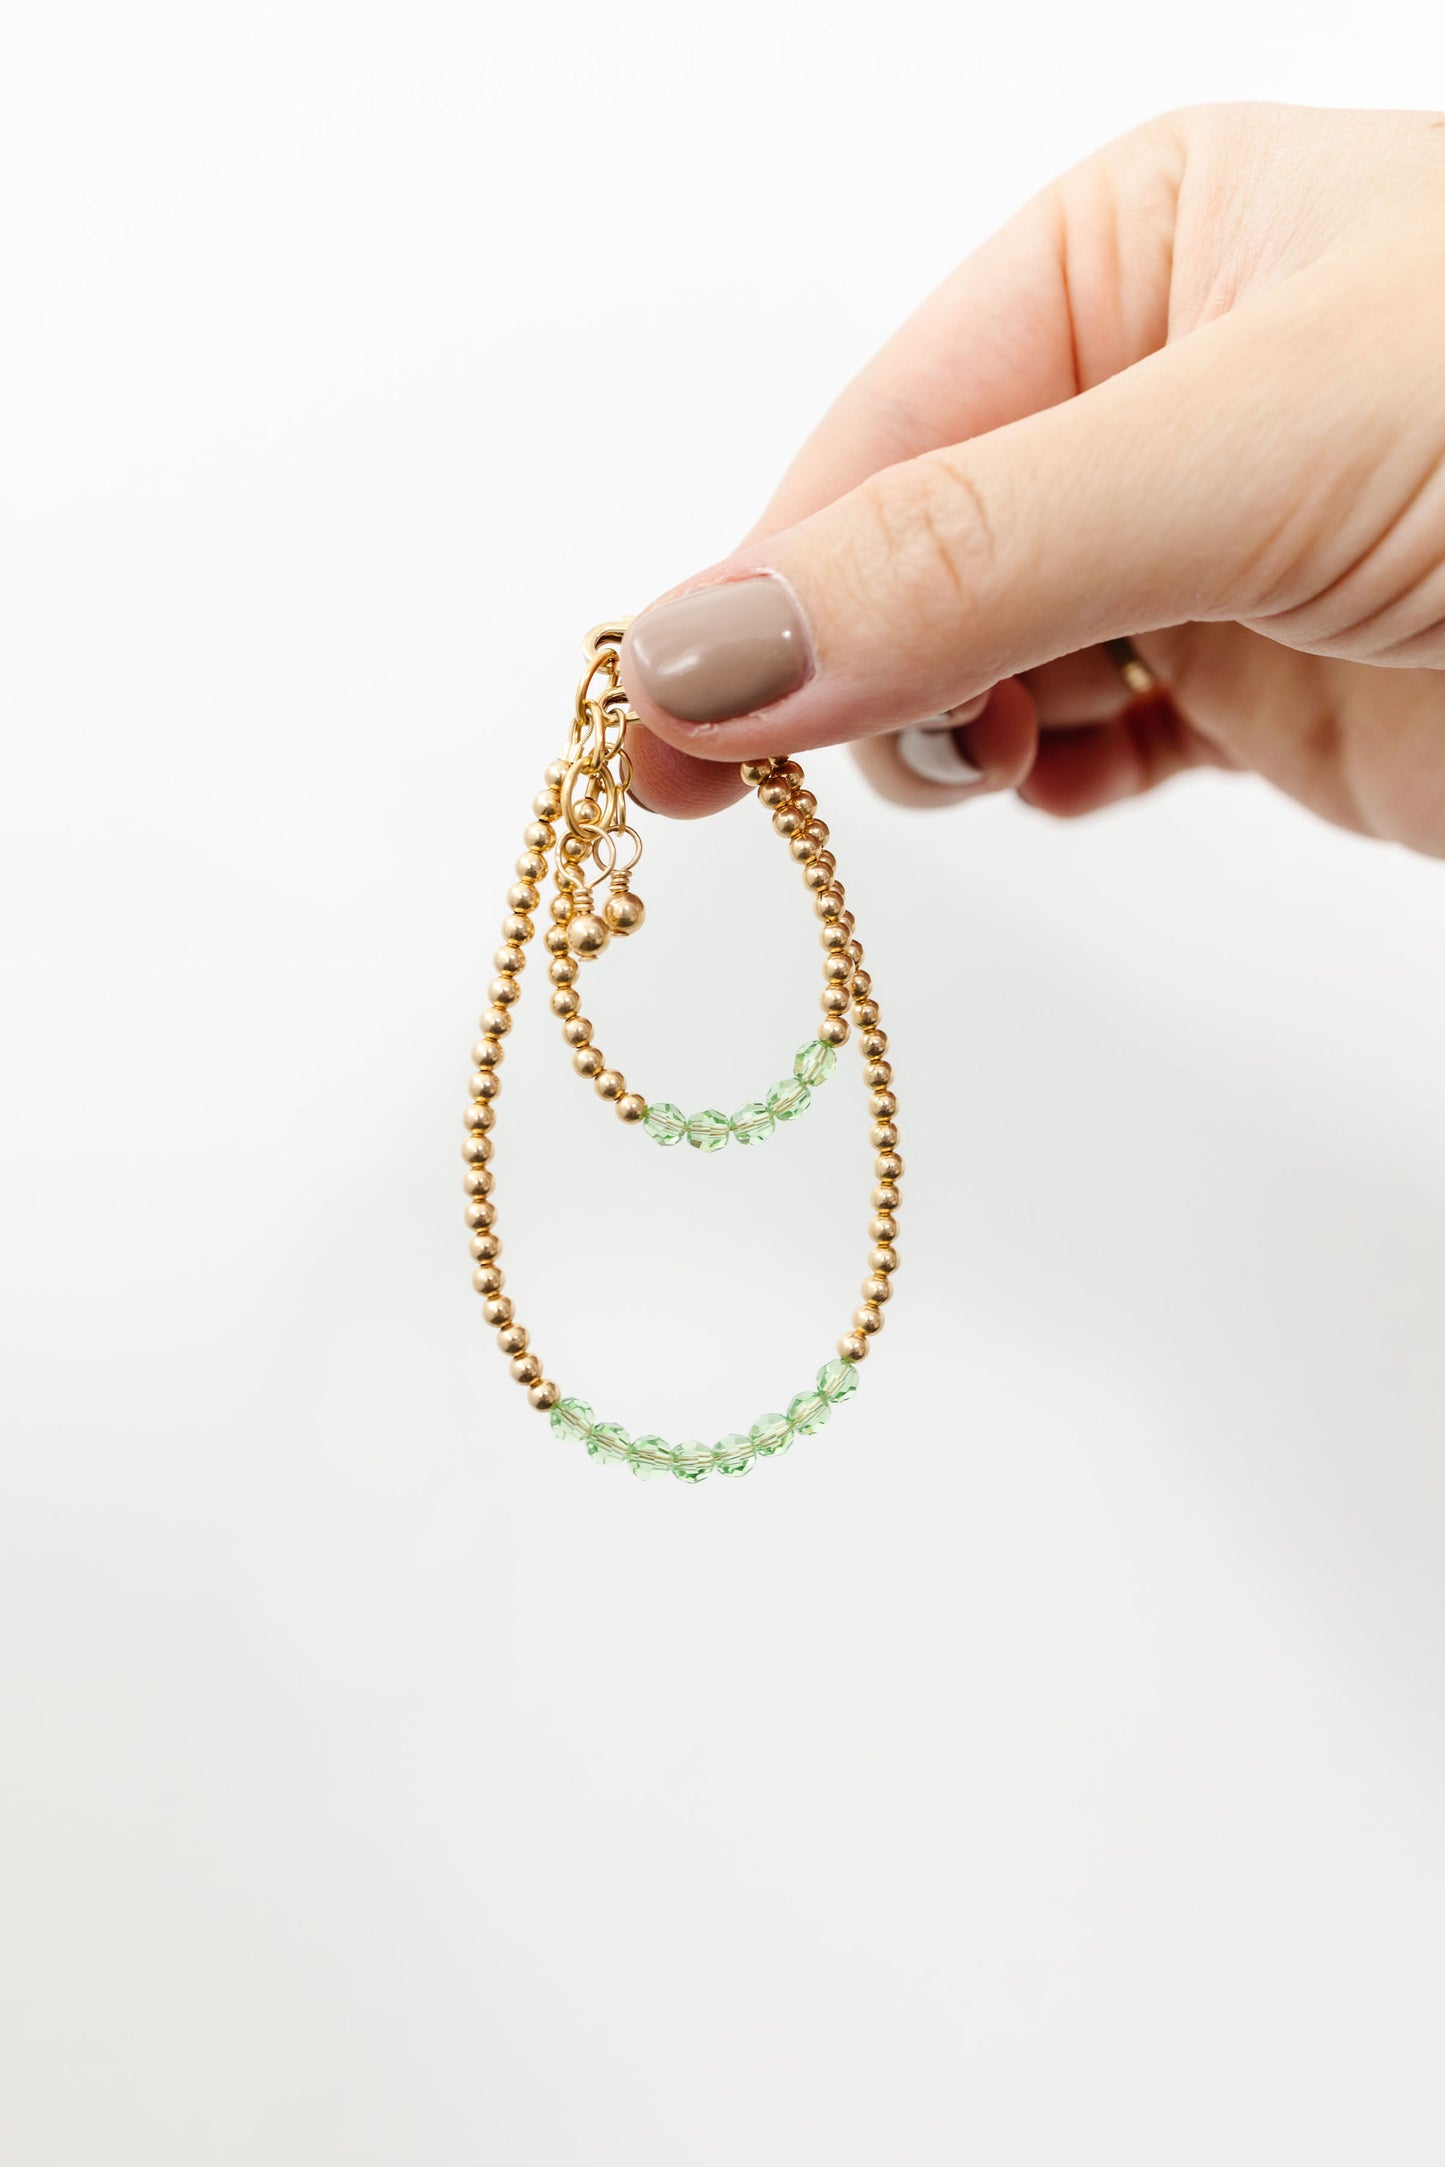 August Birthstone Mom + Mini Bracelet Set (4MM Beads)